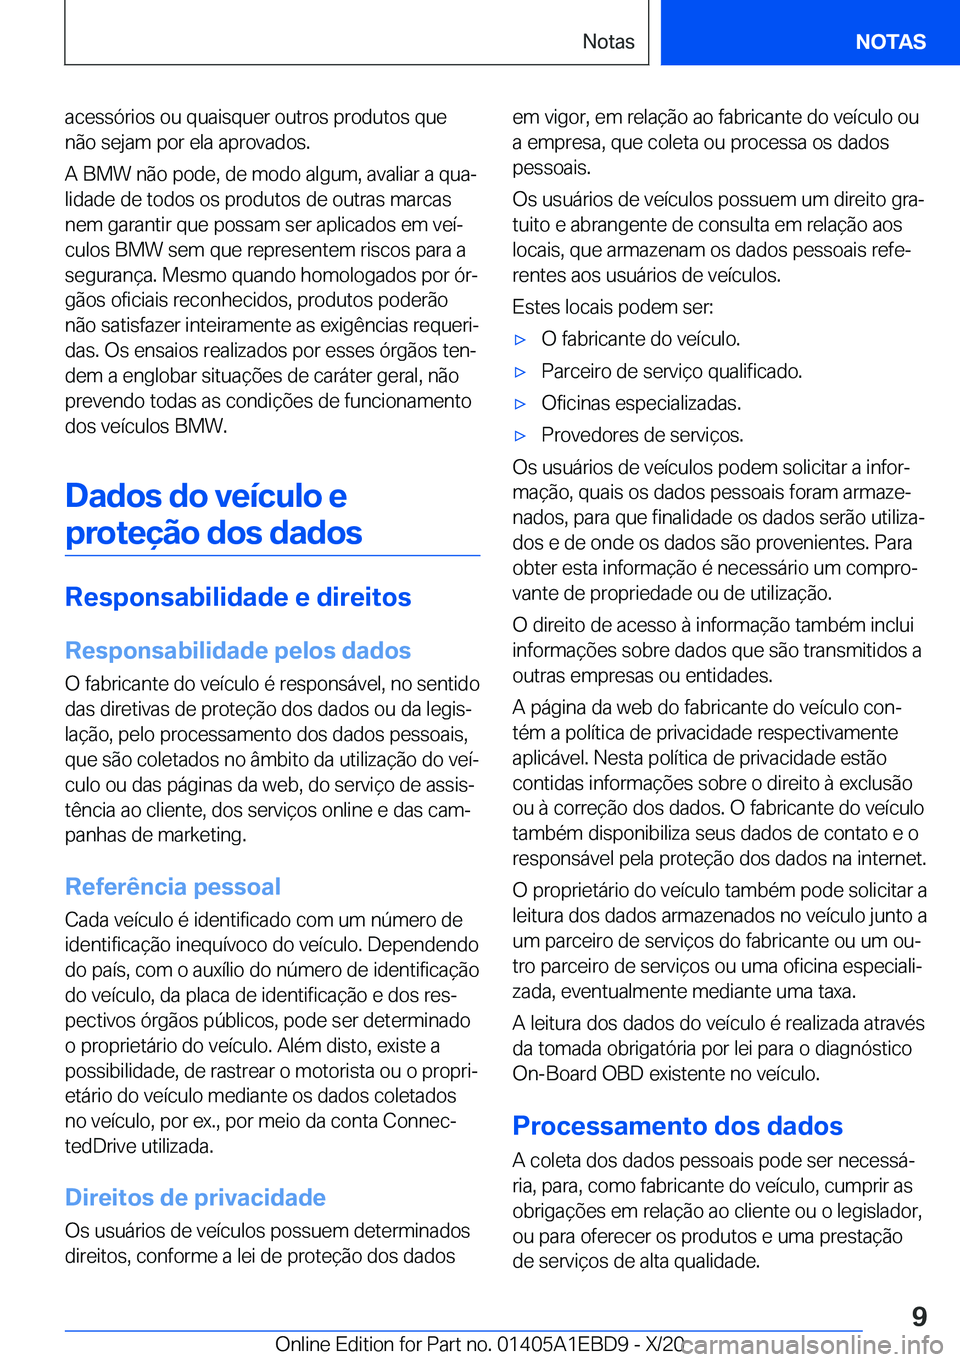 BMW 3 SERIES 2021  Manual do condutor (in Portuguese) �a�c�e�s�s�ó�r�i�o�s��o�u��q�u�a�i�s�q�u�e�r��o�u�t�r�o�s��p�r�o�d�u�t�o�s��q�u�e
�n�ã�o��s�e�j�a�m��p�o�r��e�l�a��a�p�r�o�v�a�d�o�s�.
�A��B�M�W��n�ã�o��p�o�d�e�,��d�e��m�o�d�o��a�l�